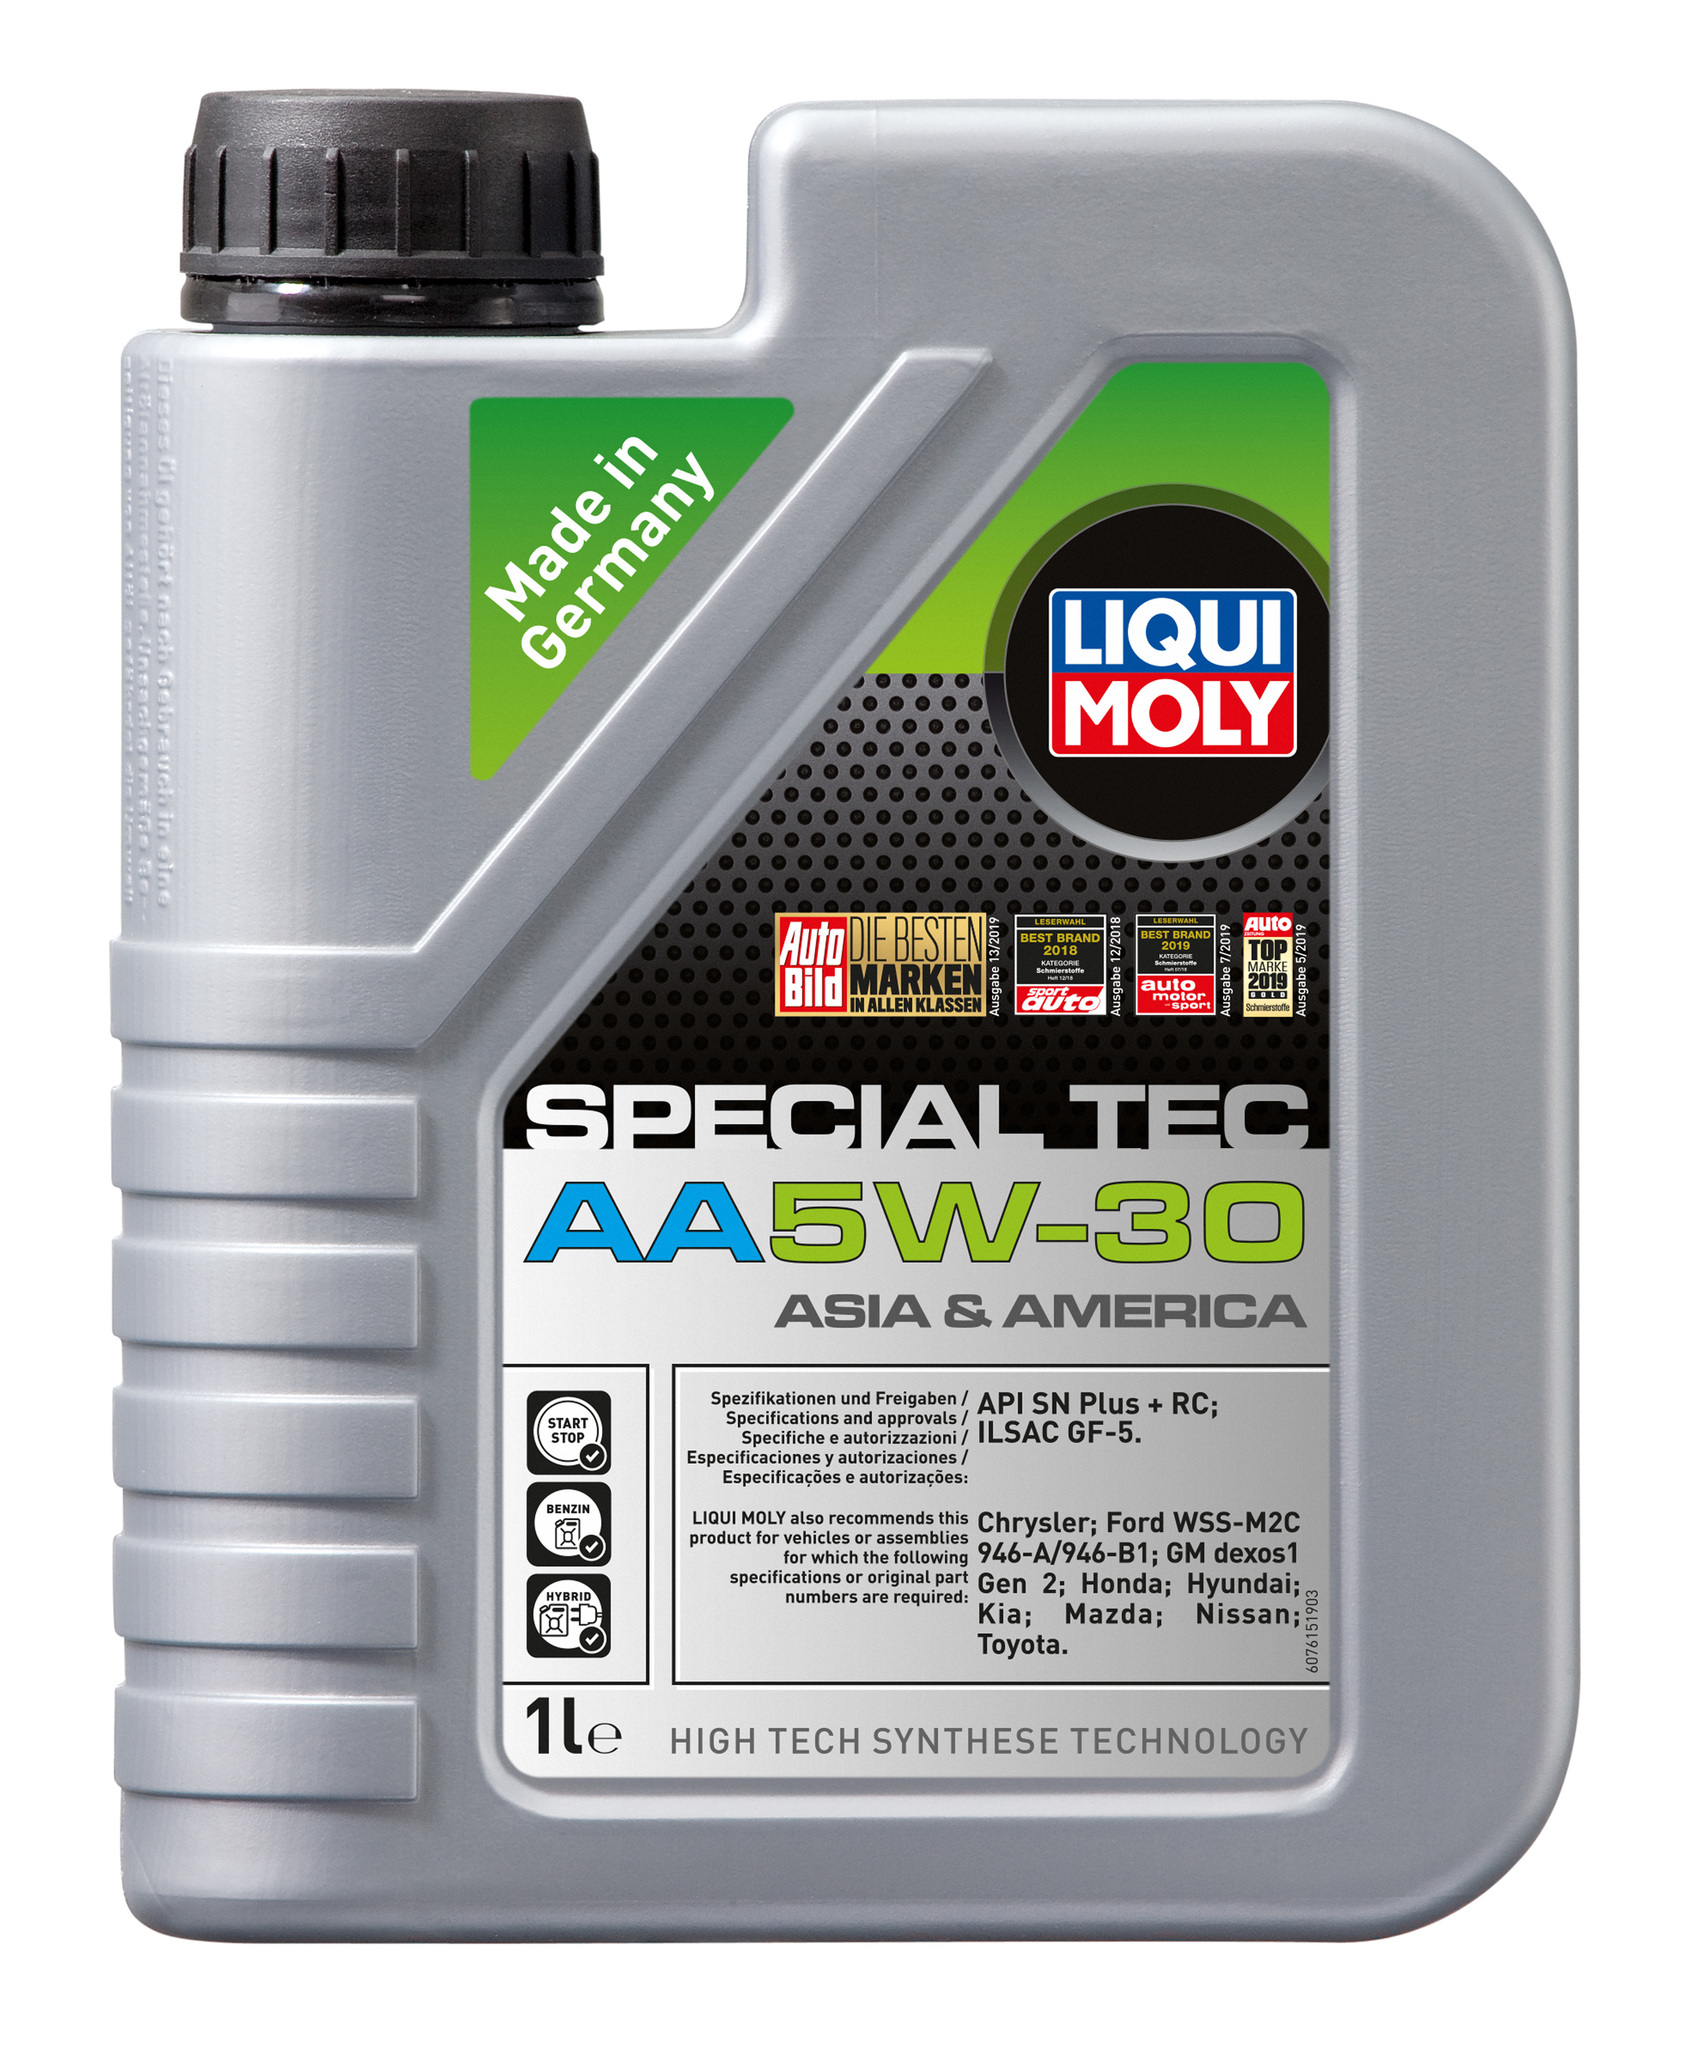 Liqui Moly Special Tec AA (Leichtlauf Special AA) 5W30 НС-синтетическое моторное масло